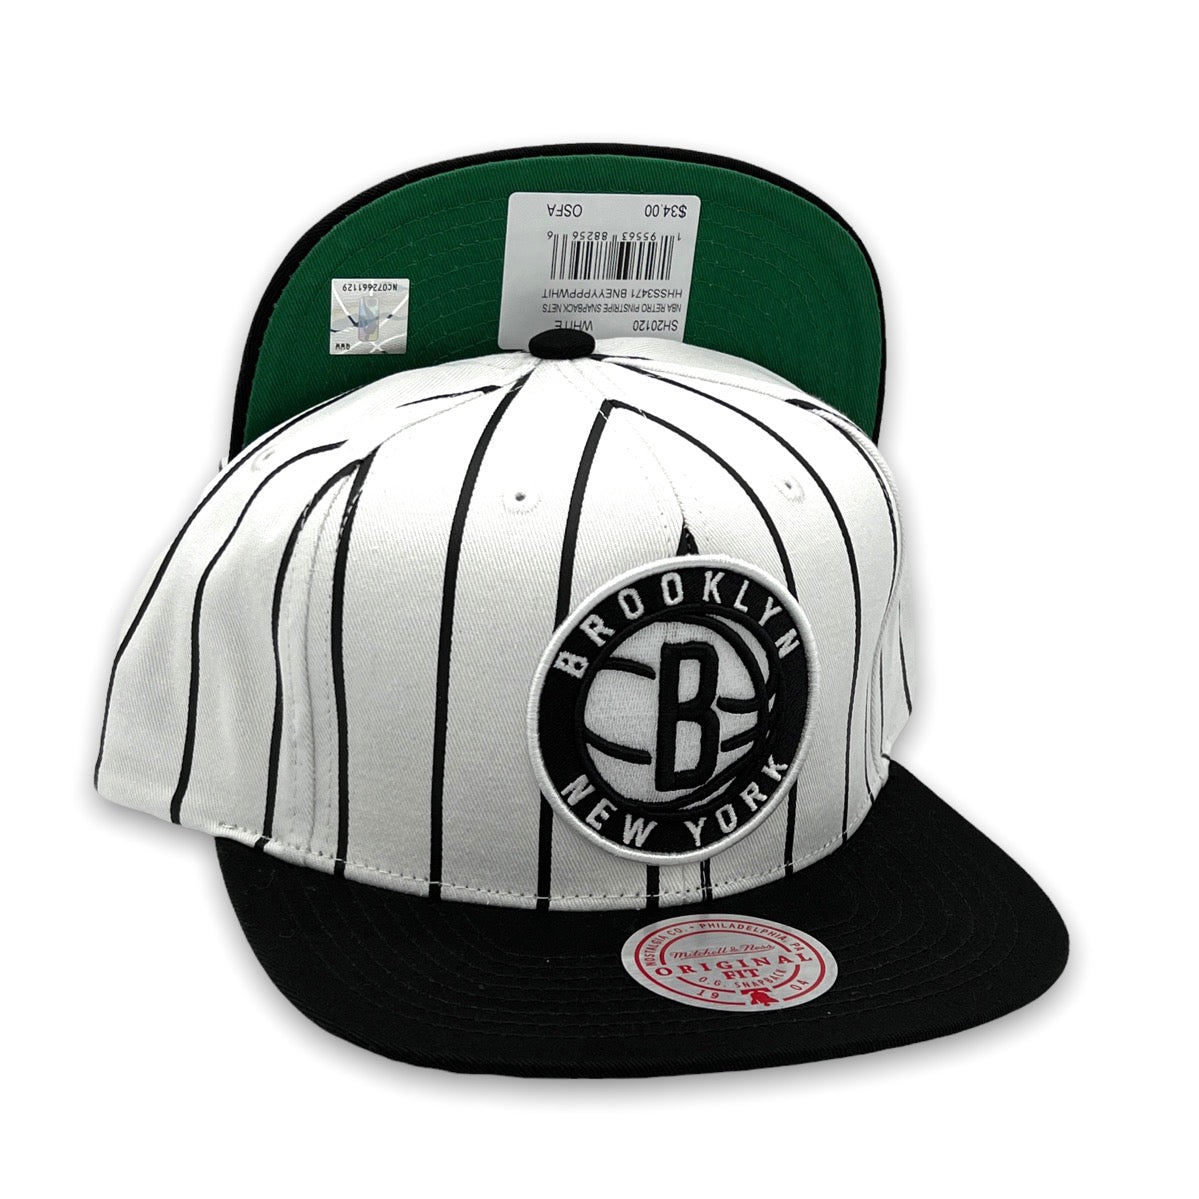  Mitchell & Ness Atlanta Hawks Reppin Retro Snapback Adjustable  Hat Cap - White : Sports & Outdoors